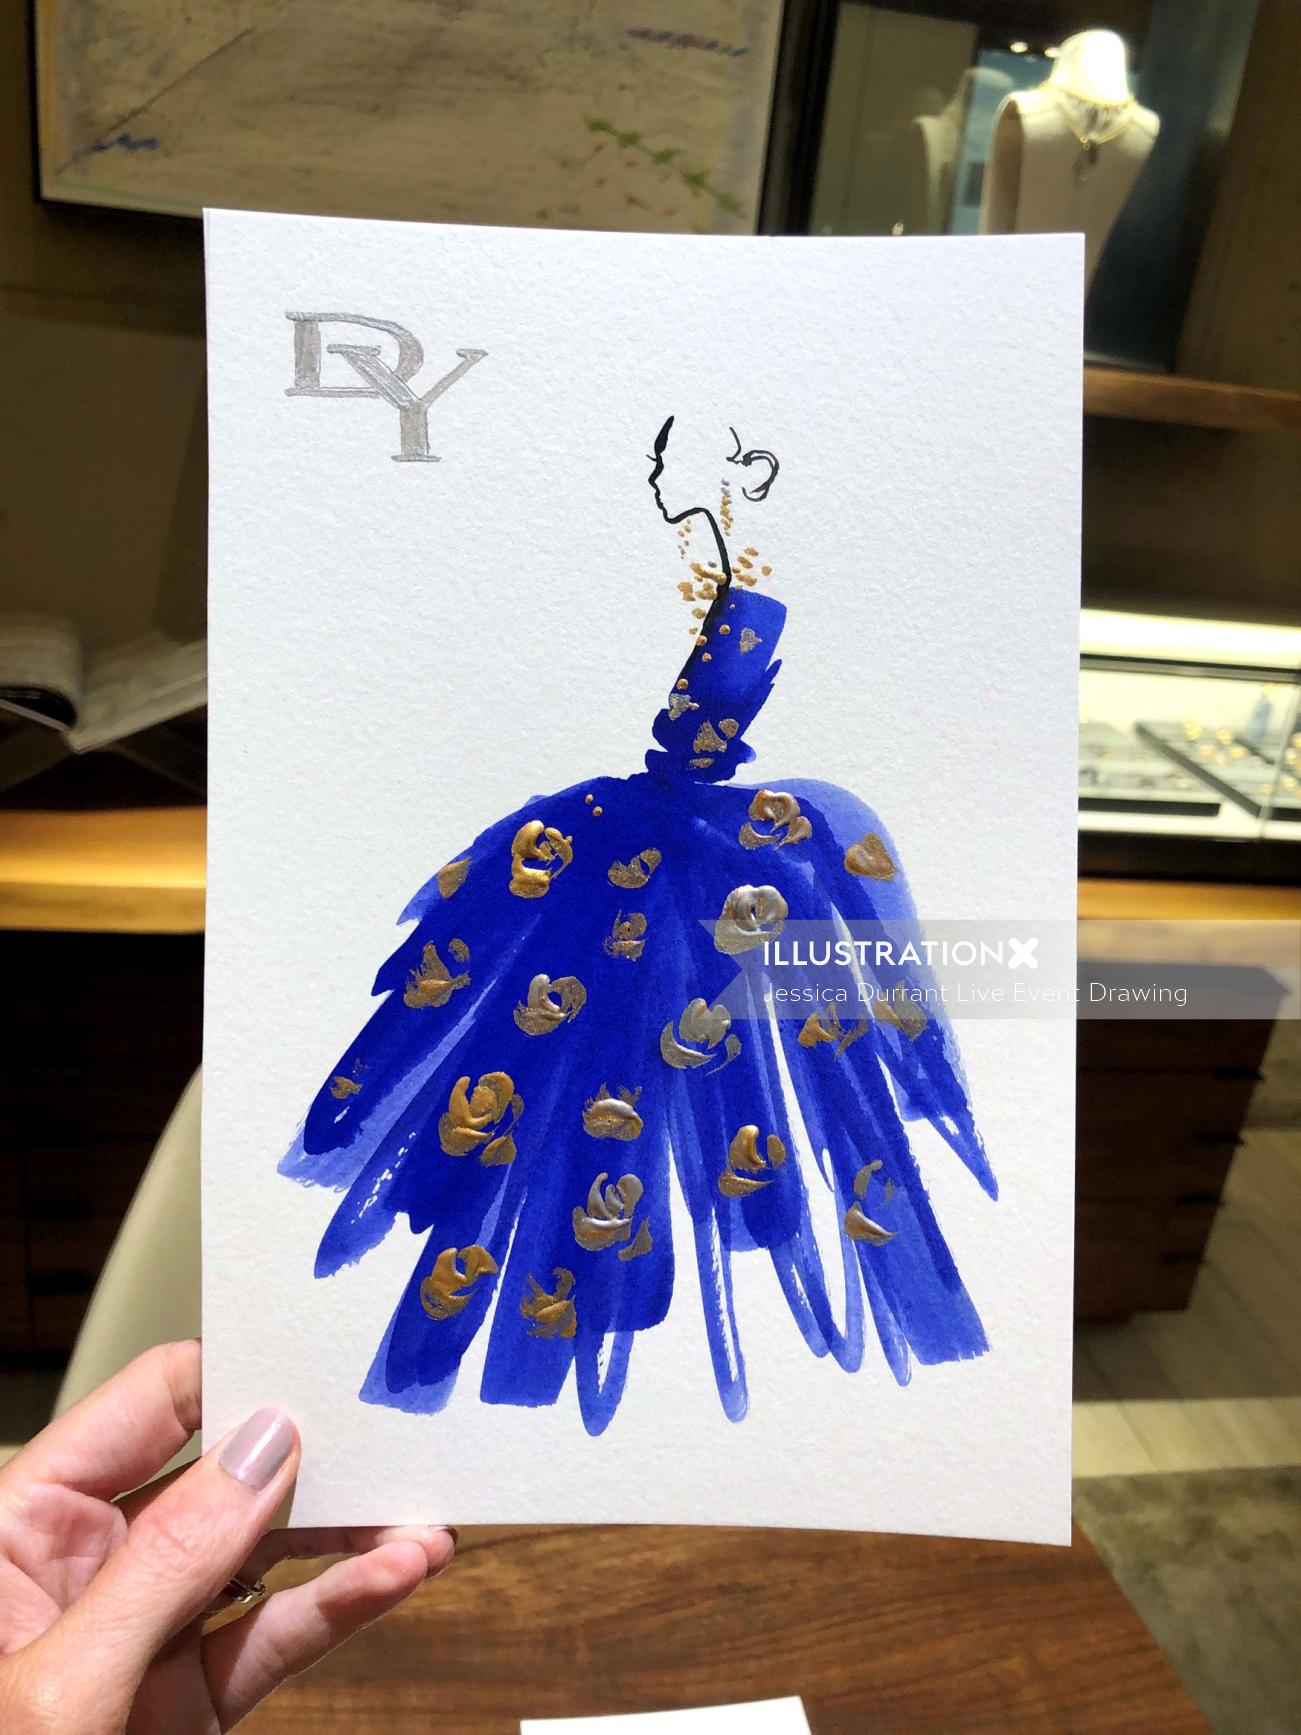 Live event drawing blue dress